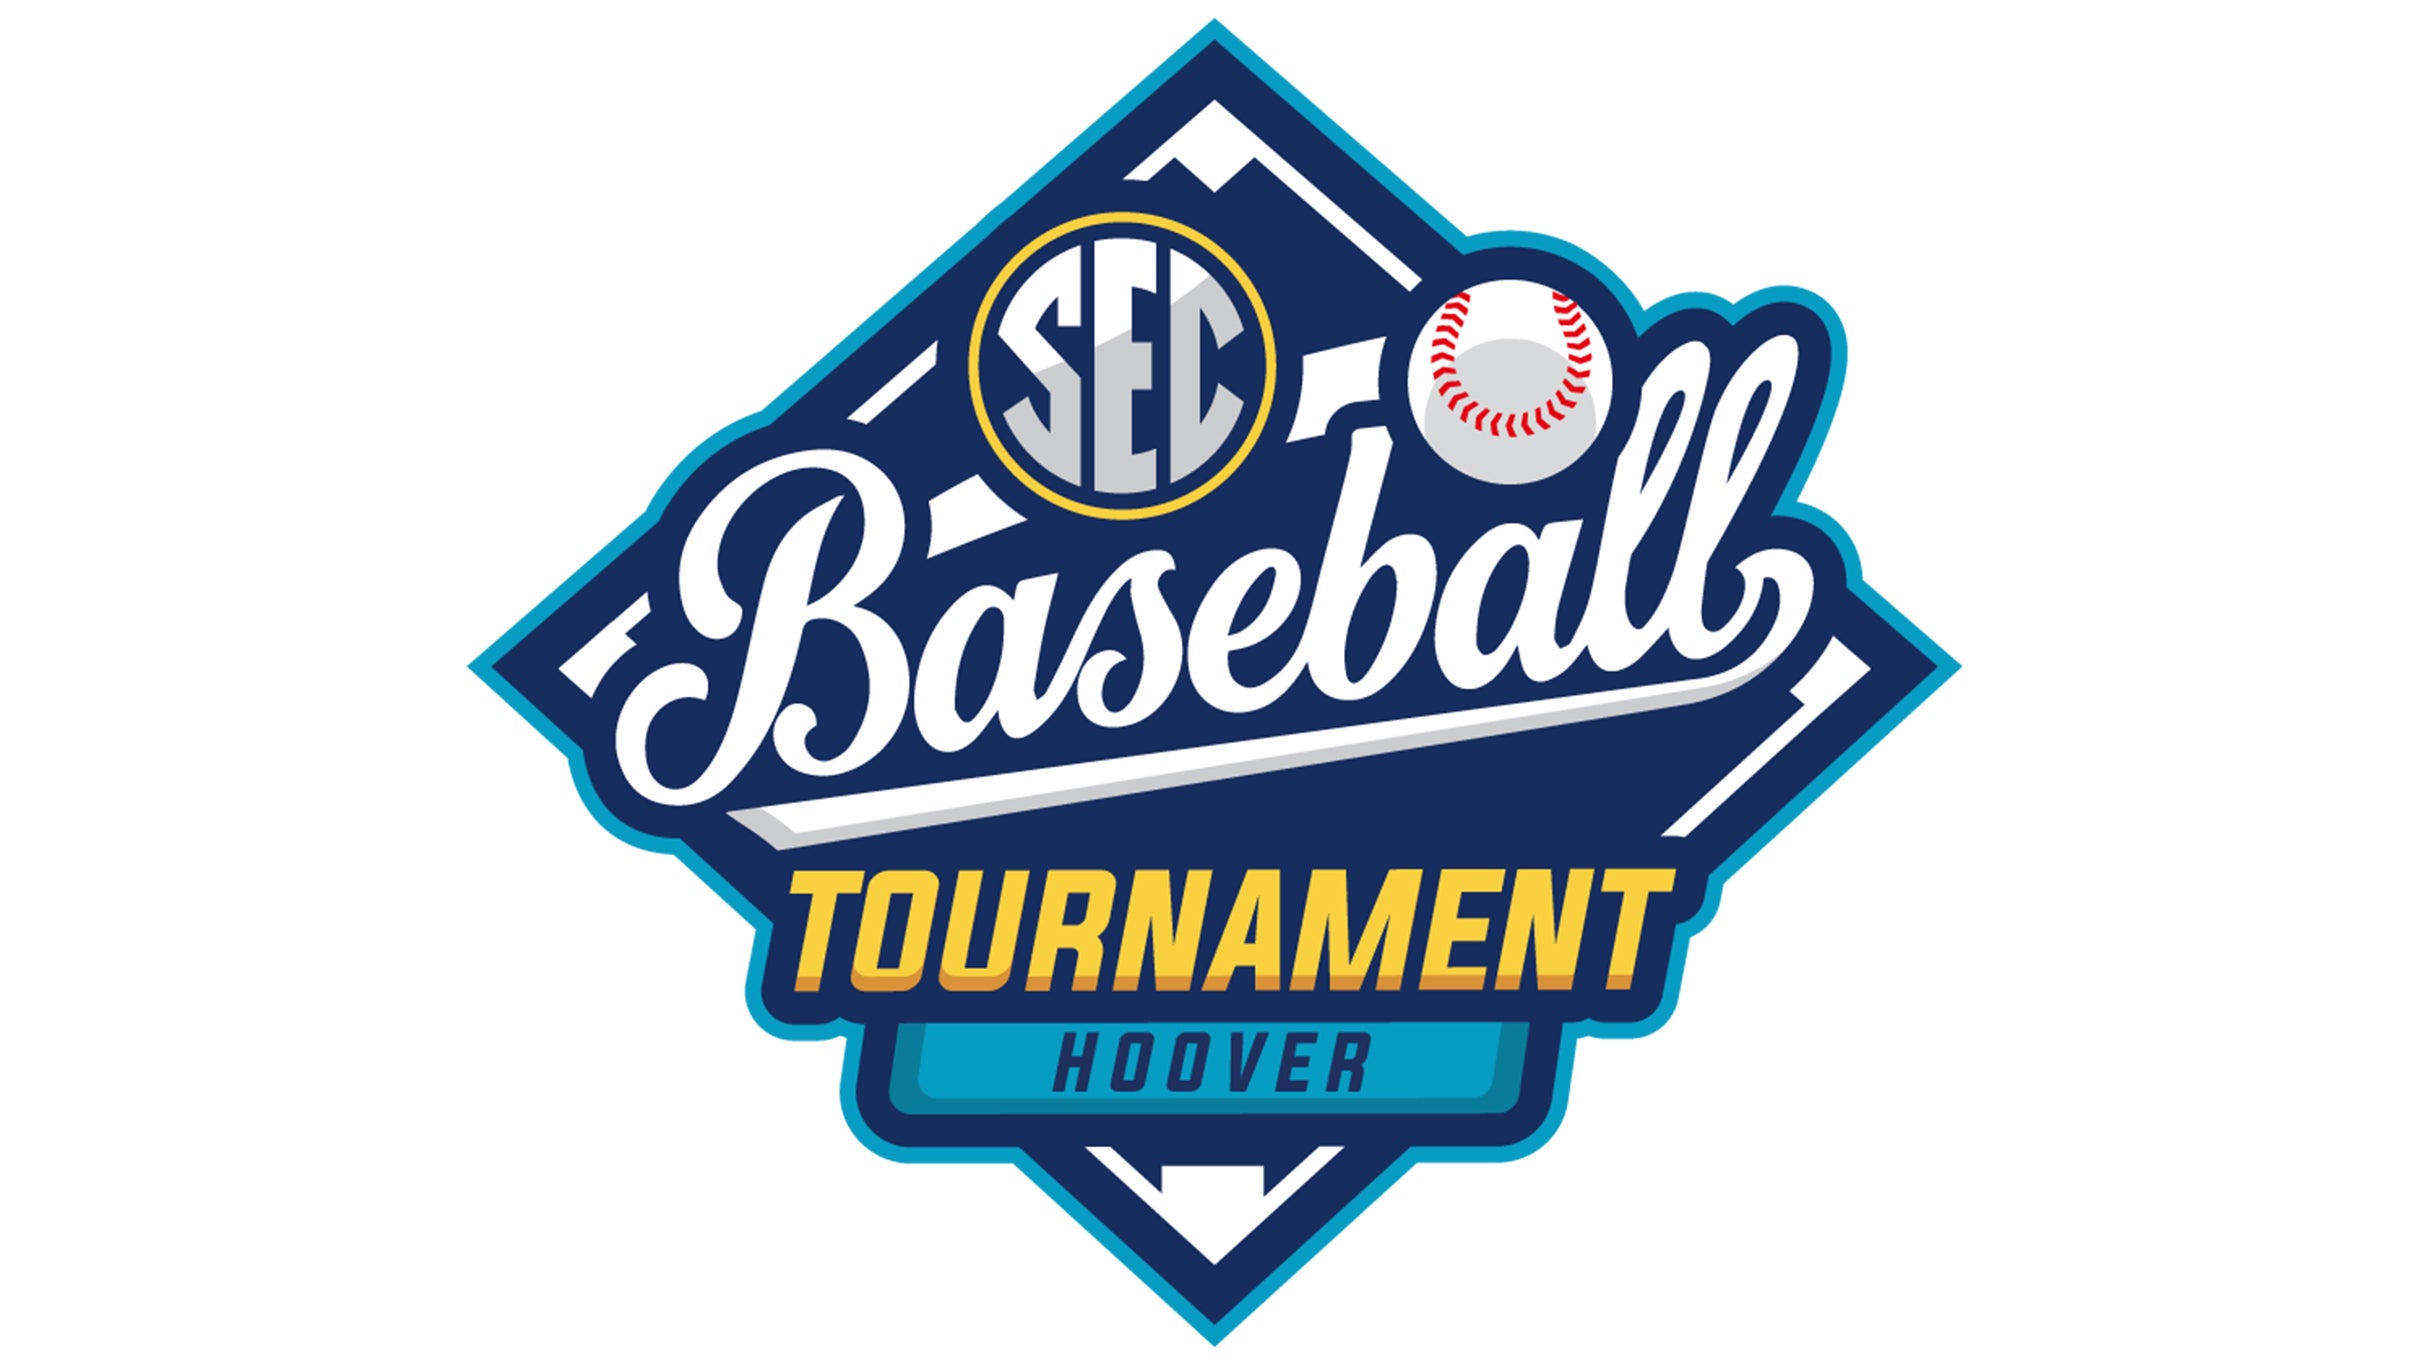 SEC Baseball Tournament- Session 1 at Hoover Metropolitan Stadium – Hoover, AL